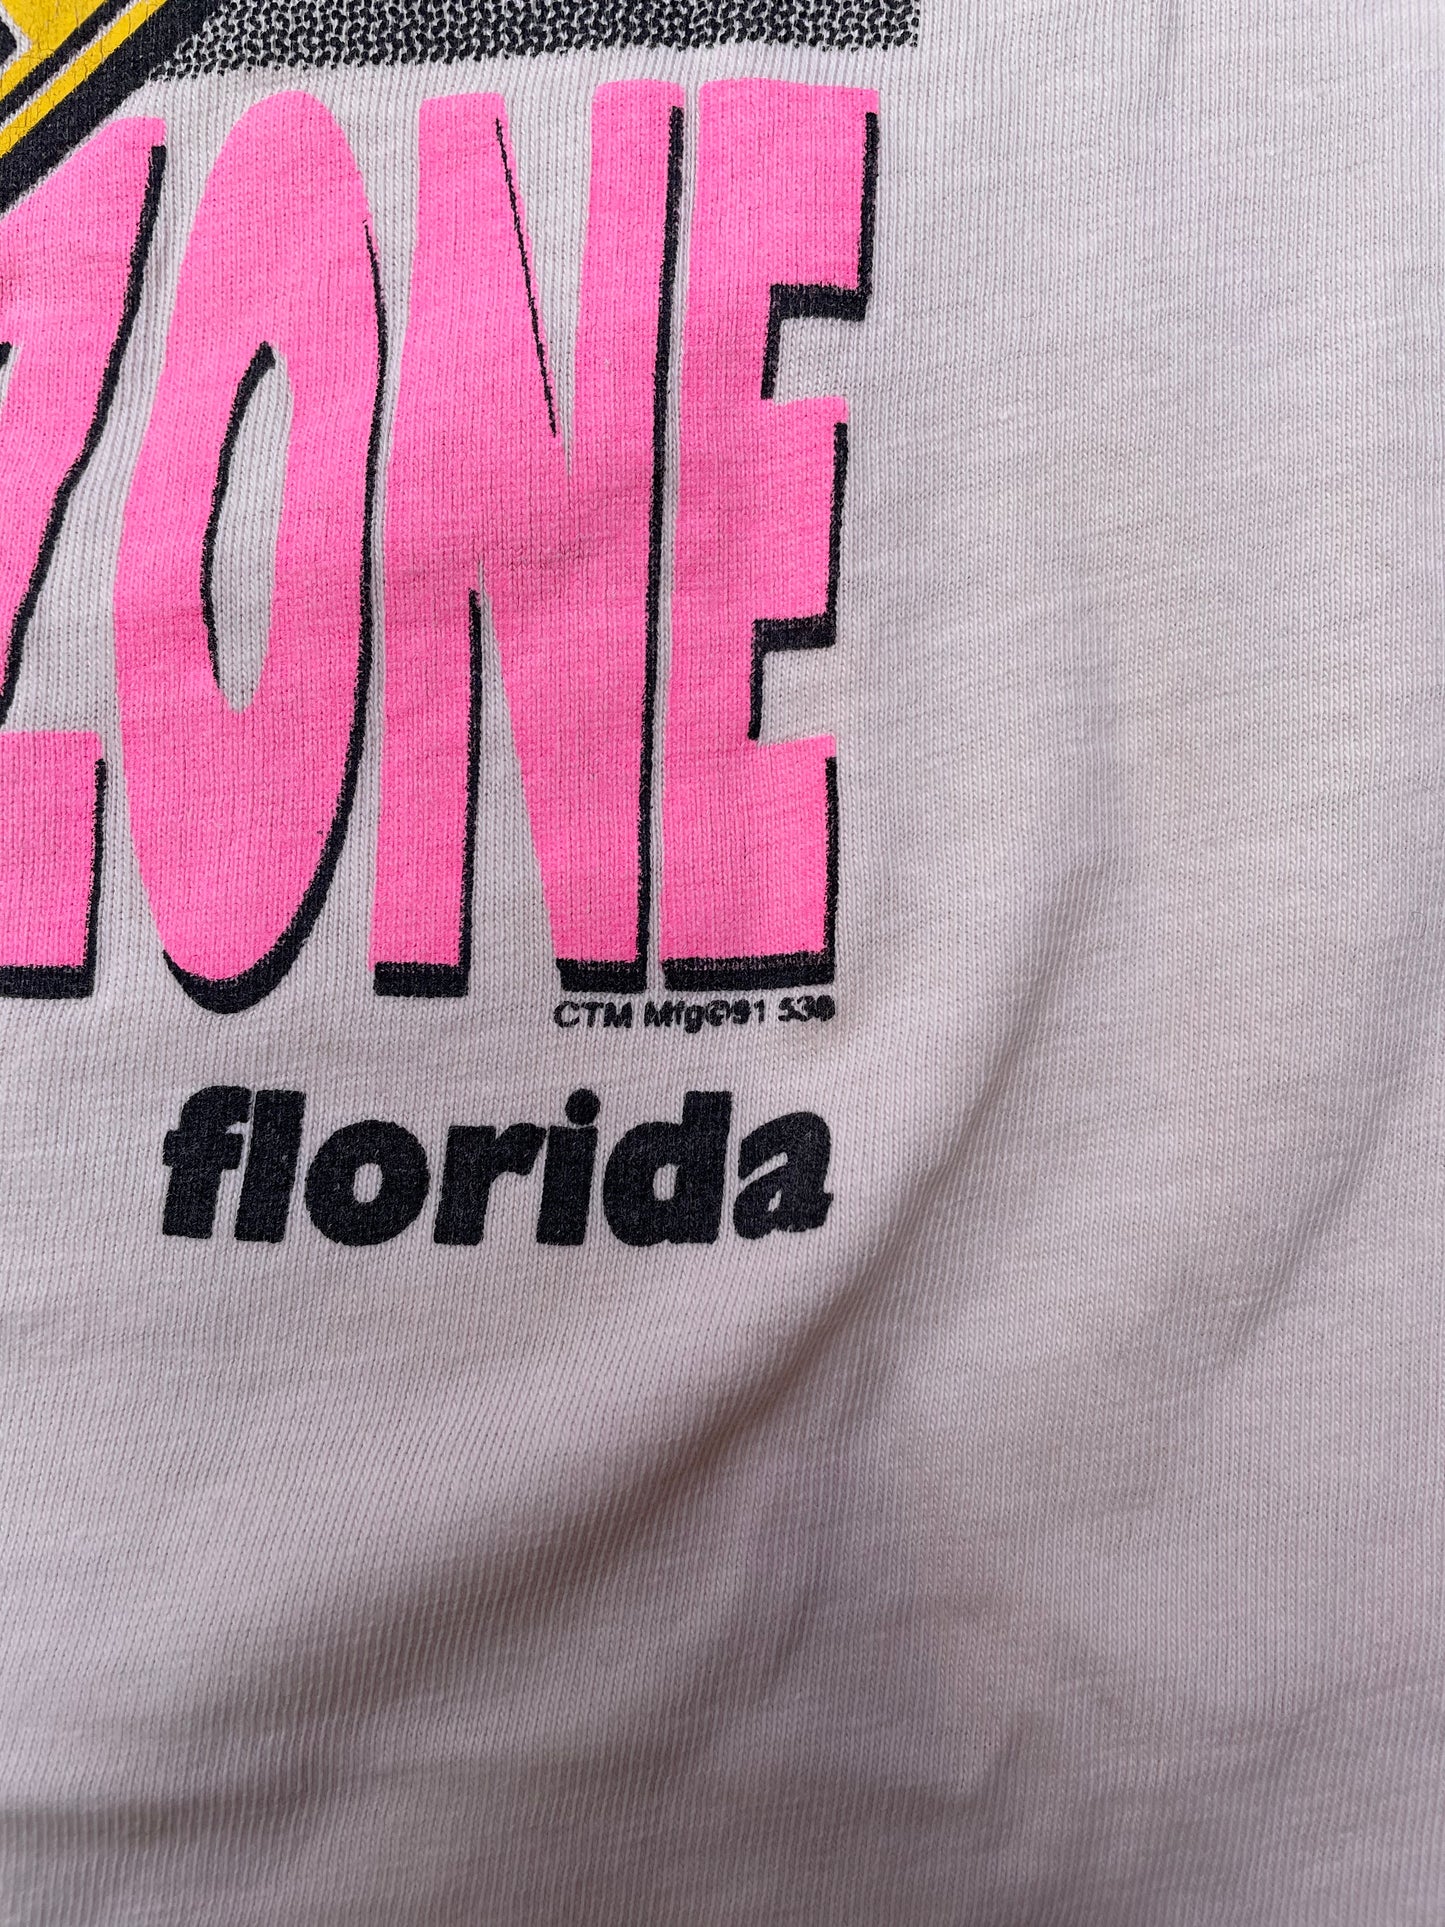 1991 'Warning Shark Zone' Florida Graphic T-Shirt - L